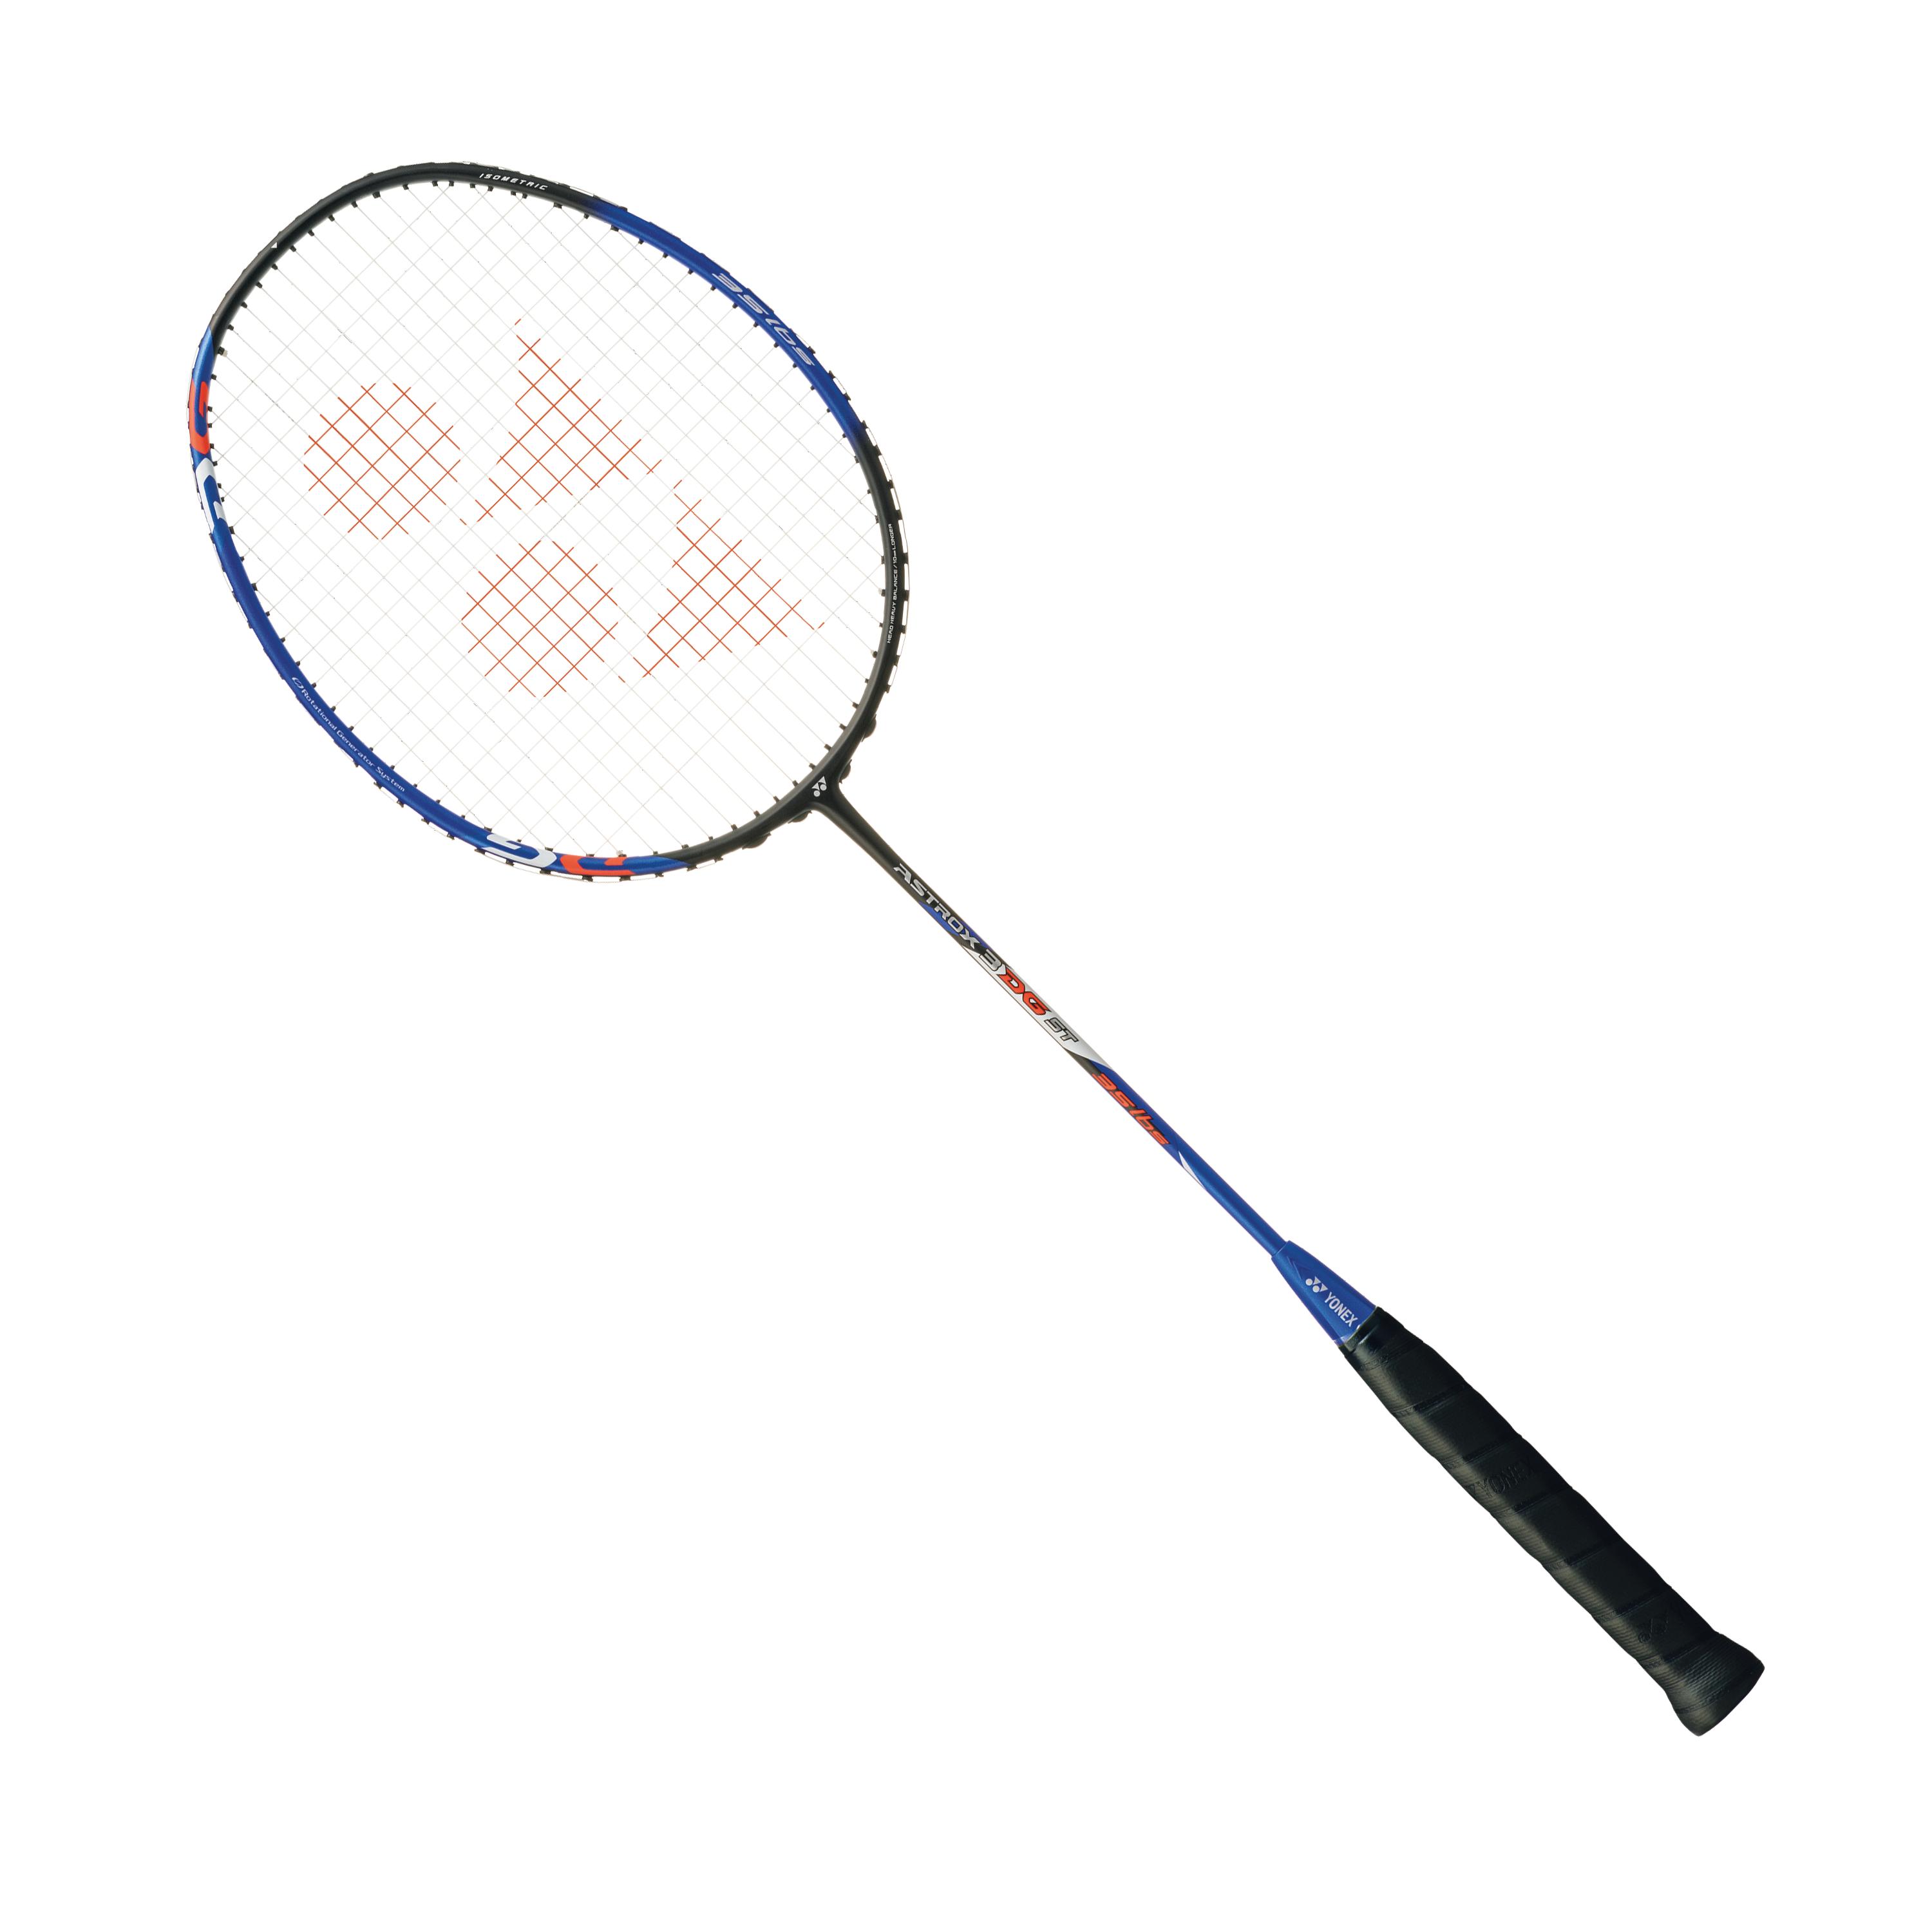 Yonex Astrox 3DG ST Badminton Racquet Black/ Blue 4U(83g)G5